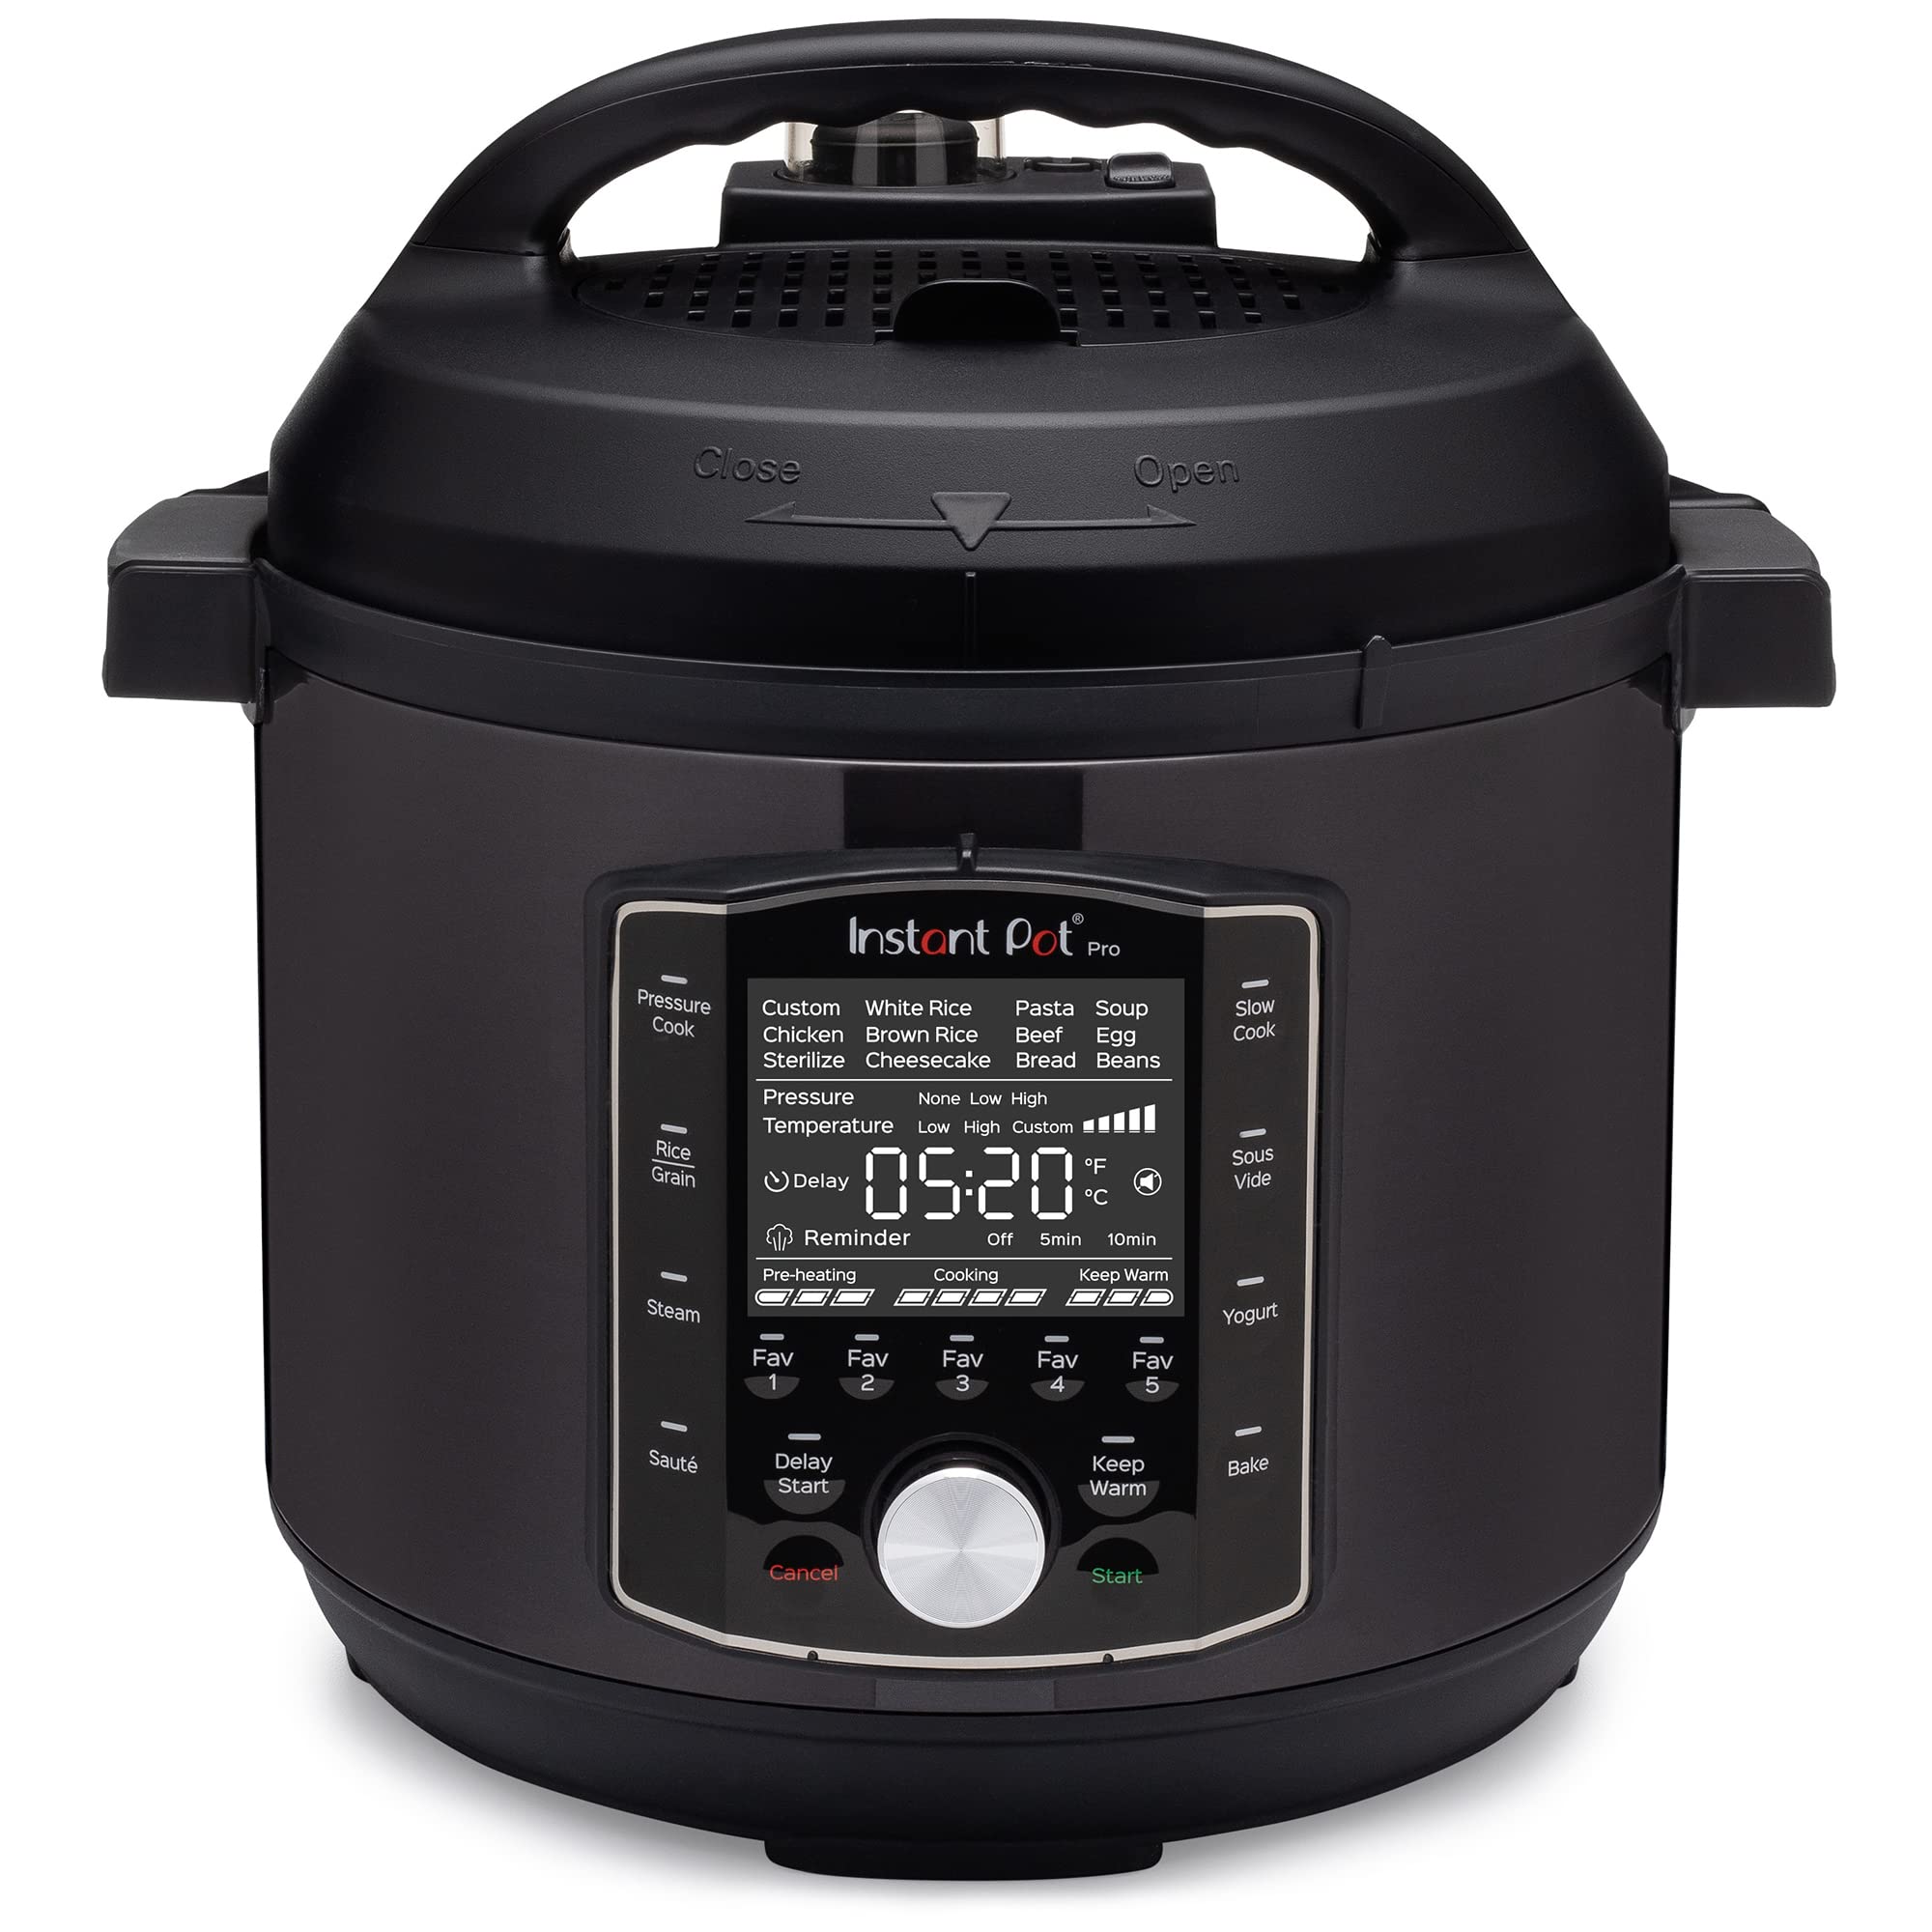 Amazon.com: Instant Pot Pro (8 QT) 10-in-1 Pressure Cooker, Slow Cooker, Rice/Grain Cooker, Steamer, Sauté, Sous Vide, Yogurt Maker, Sterilizer, and Warmer $119.99